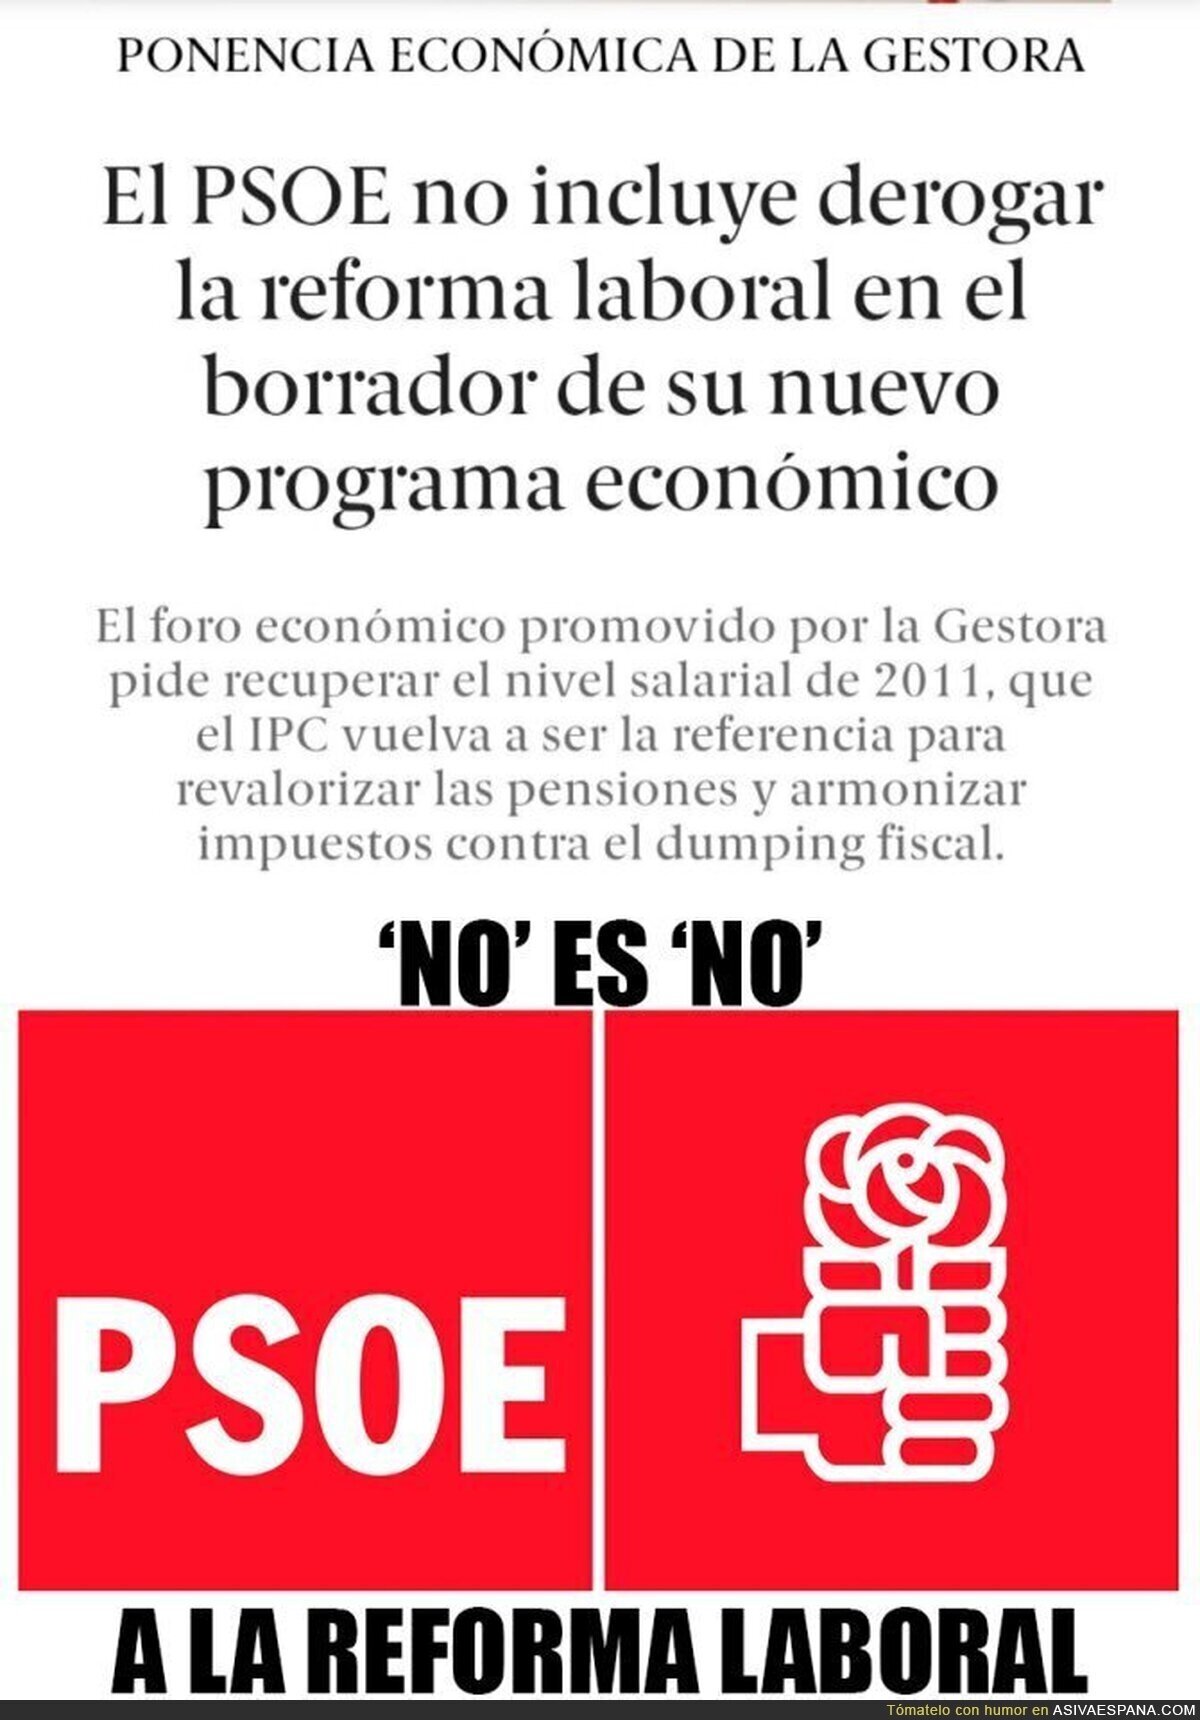 Vaya fiesta obreros votantes del PSOE, ¿Eh?